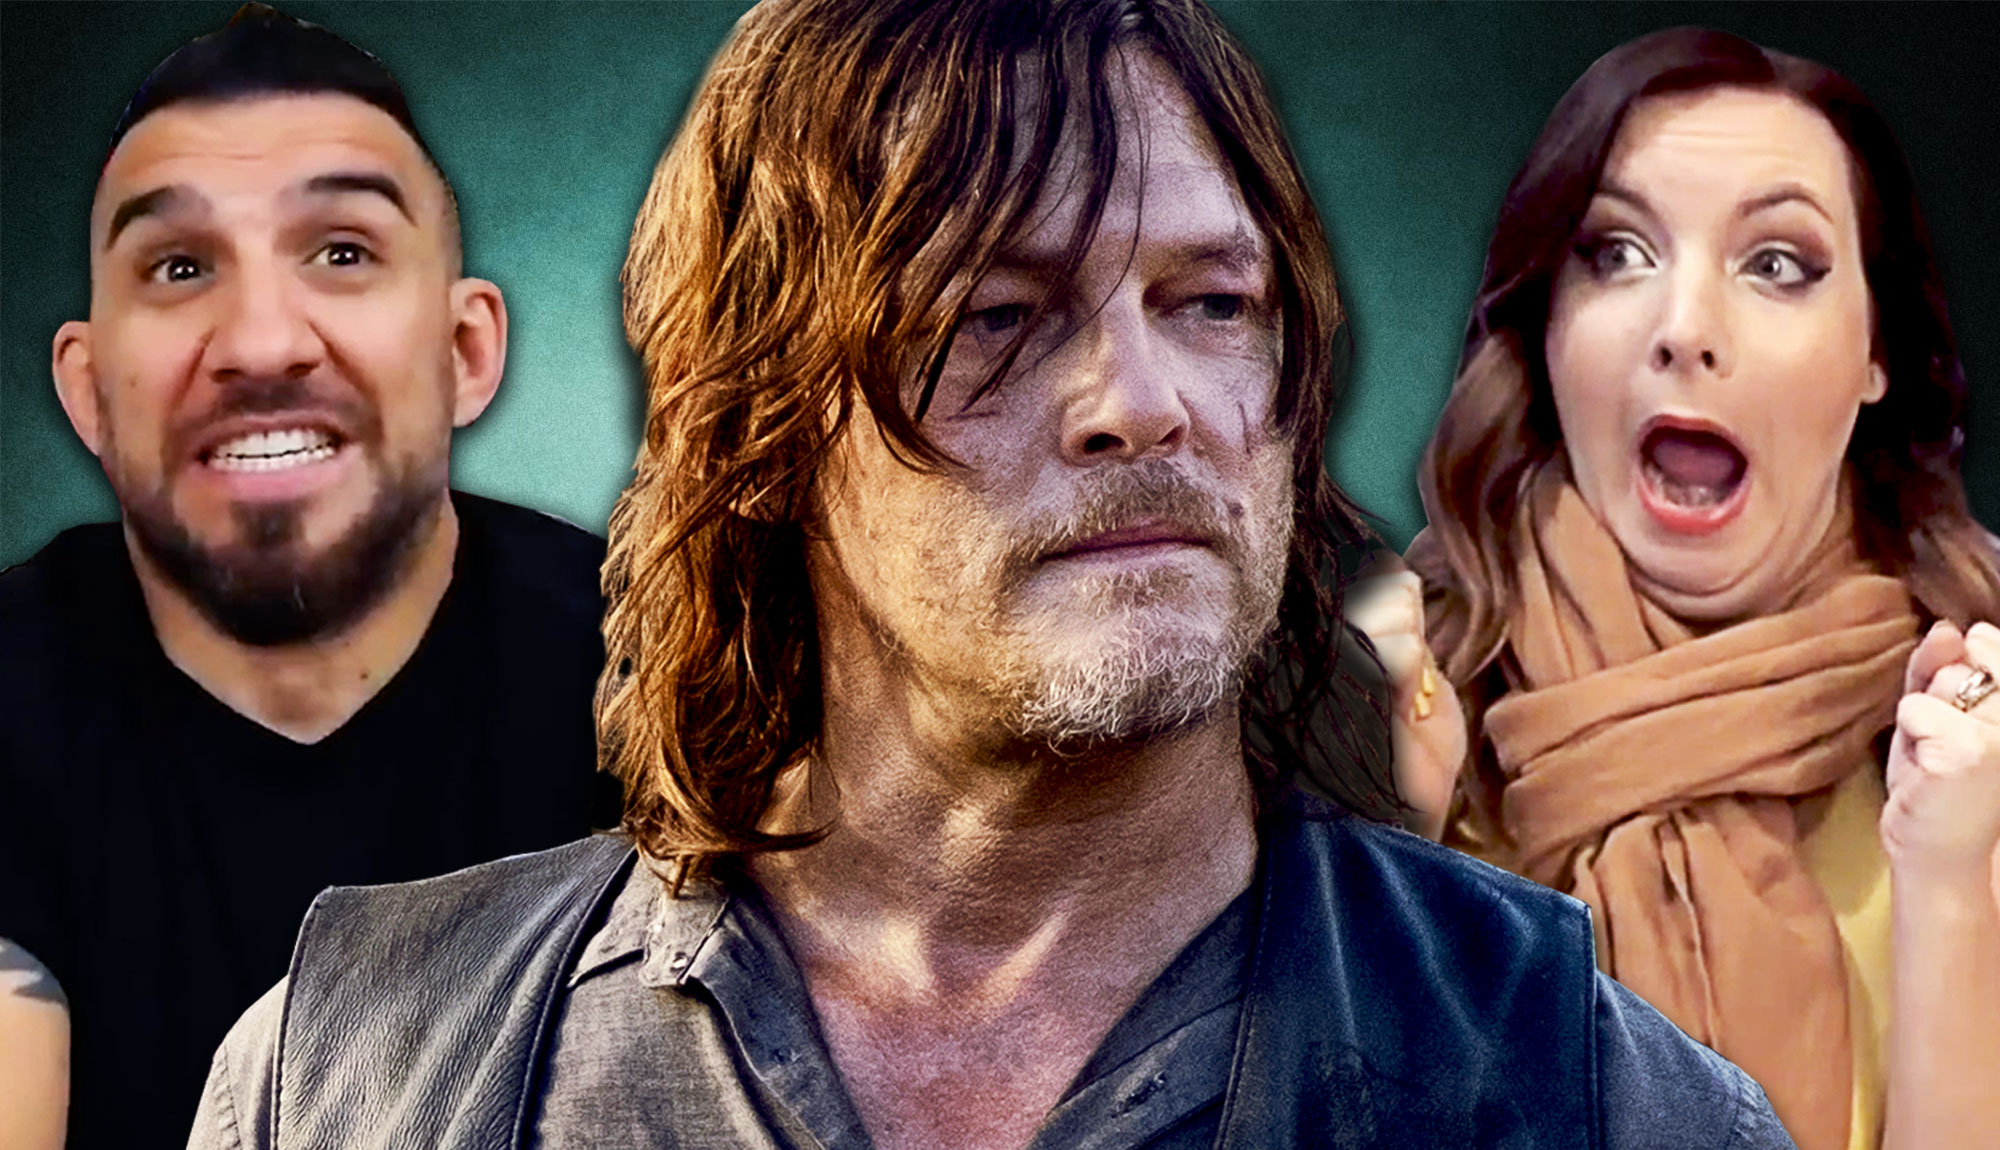 Fans React to The Walking Dead Season 9 Episode 13: “Chokepoint”